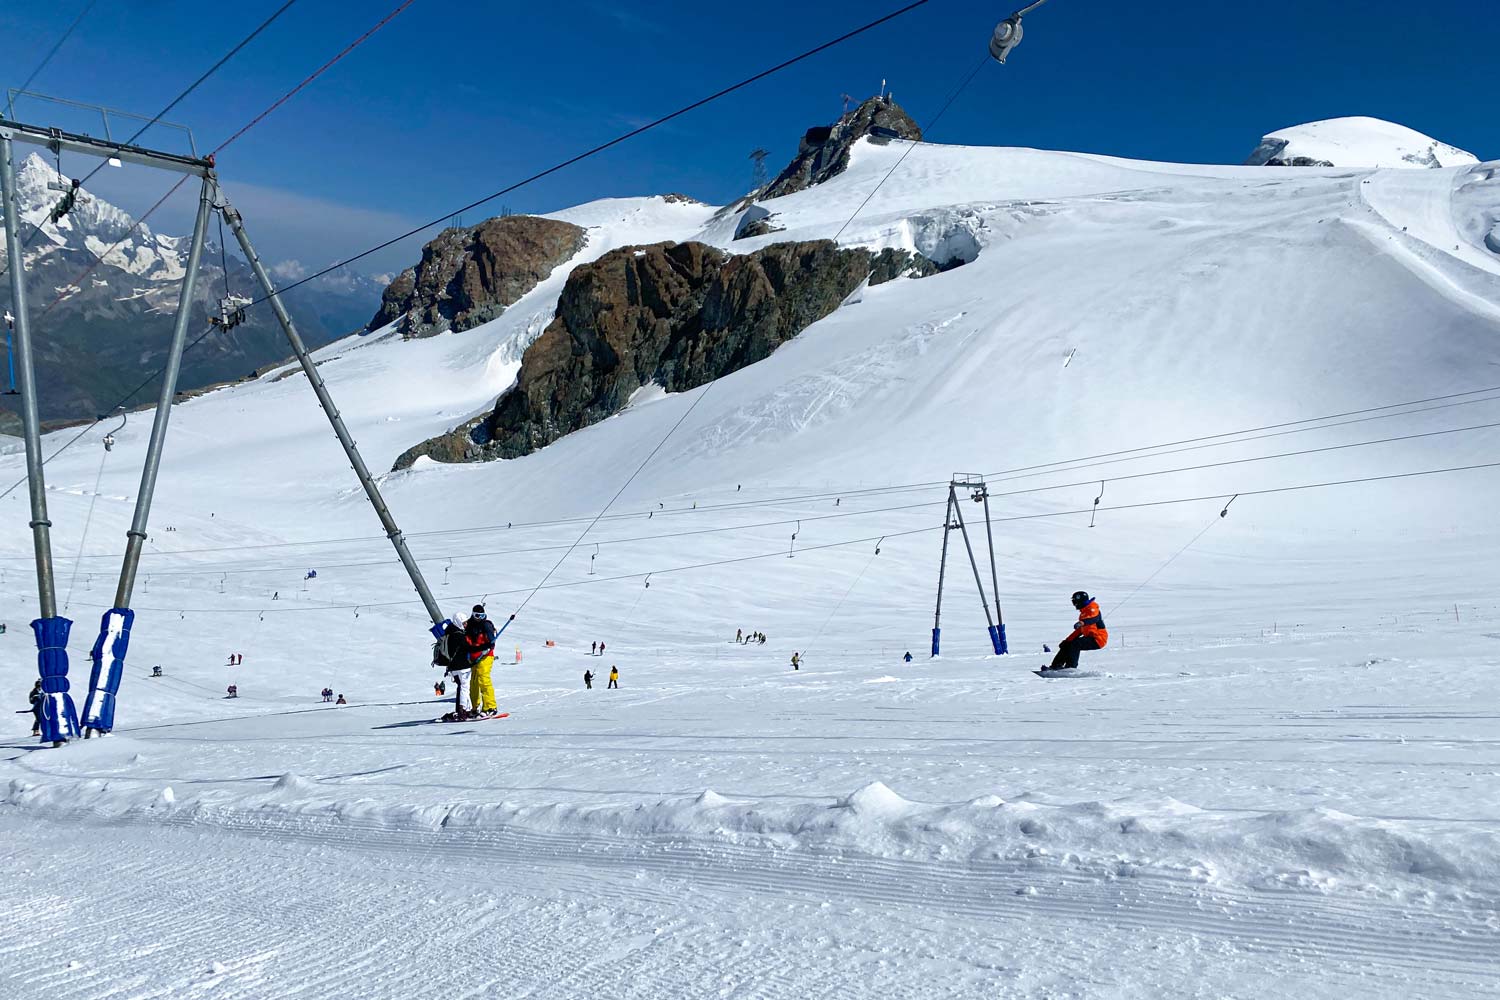 Matterhorn Ski Paradise